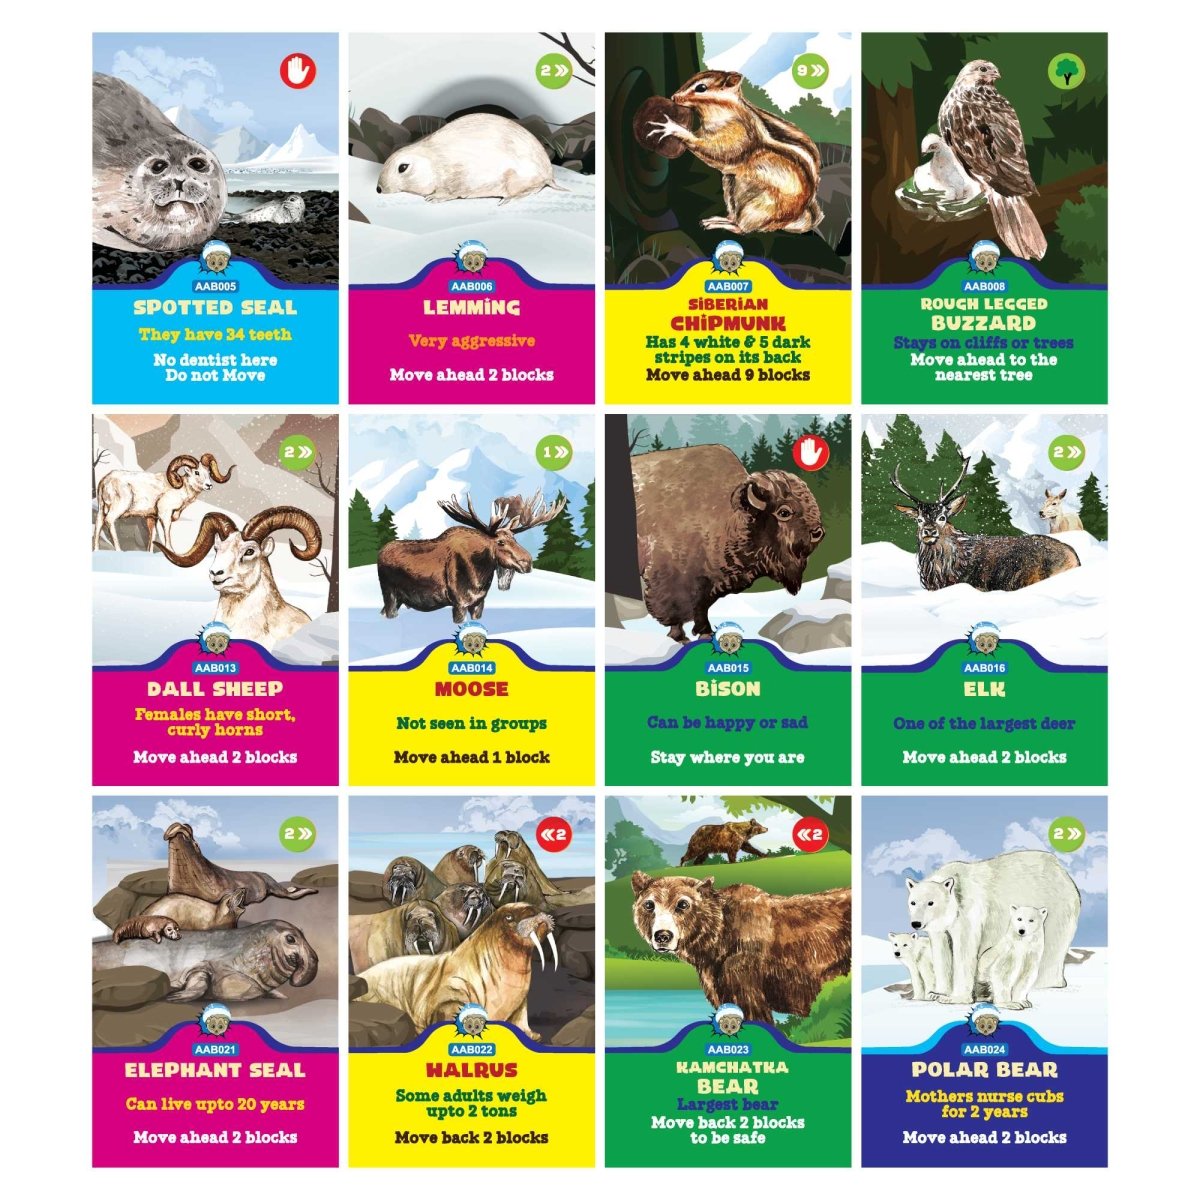 Kaadoo Animal Buddy Arctic World Play & Learn Kids Board Game - AB-Arctic